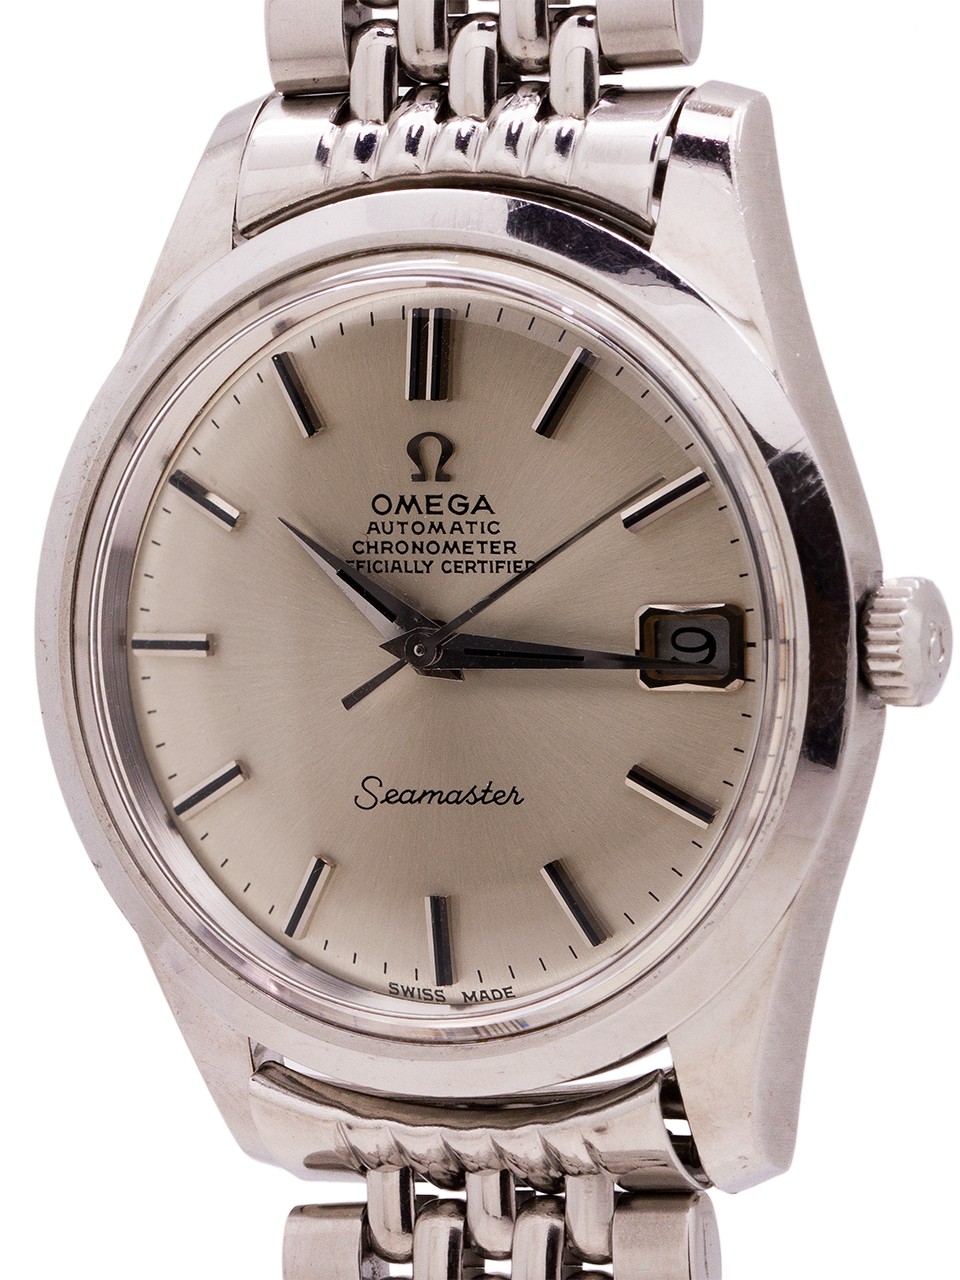 Omega Seamaster Chronometer ref 168.024 Stainless Steel circa 1968